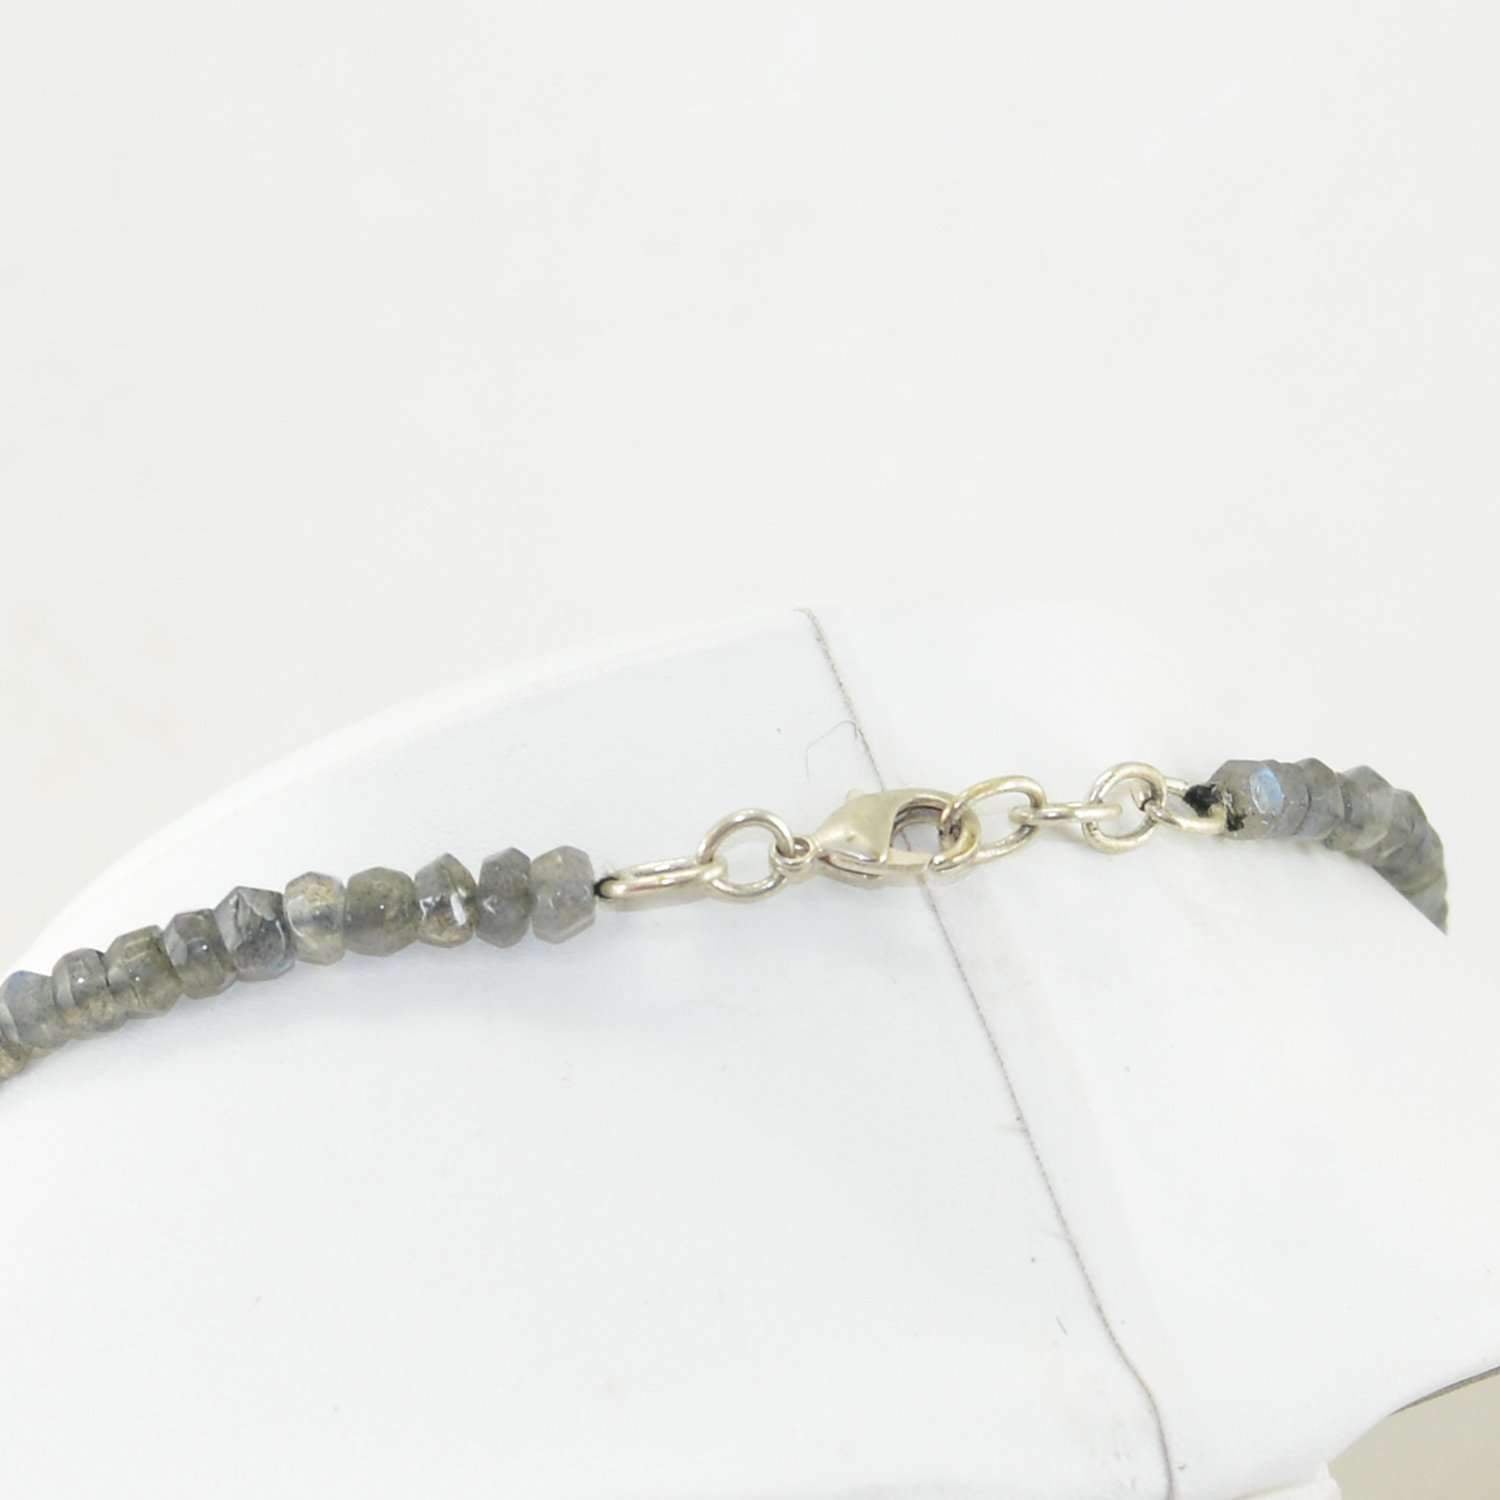 gemsmore:Faceted Blue Flash Labradorite Necklace Natural Round Beads - Single Strand